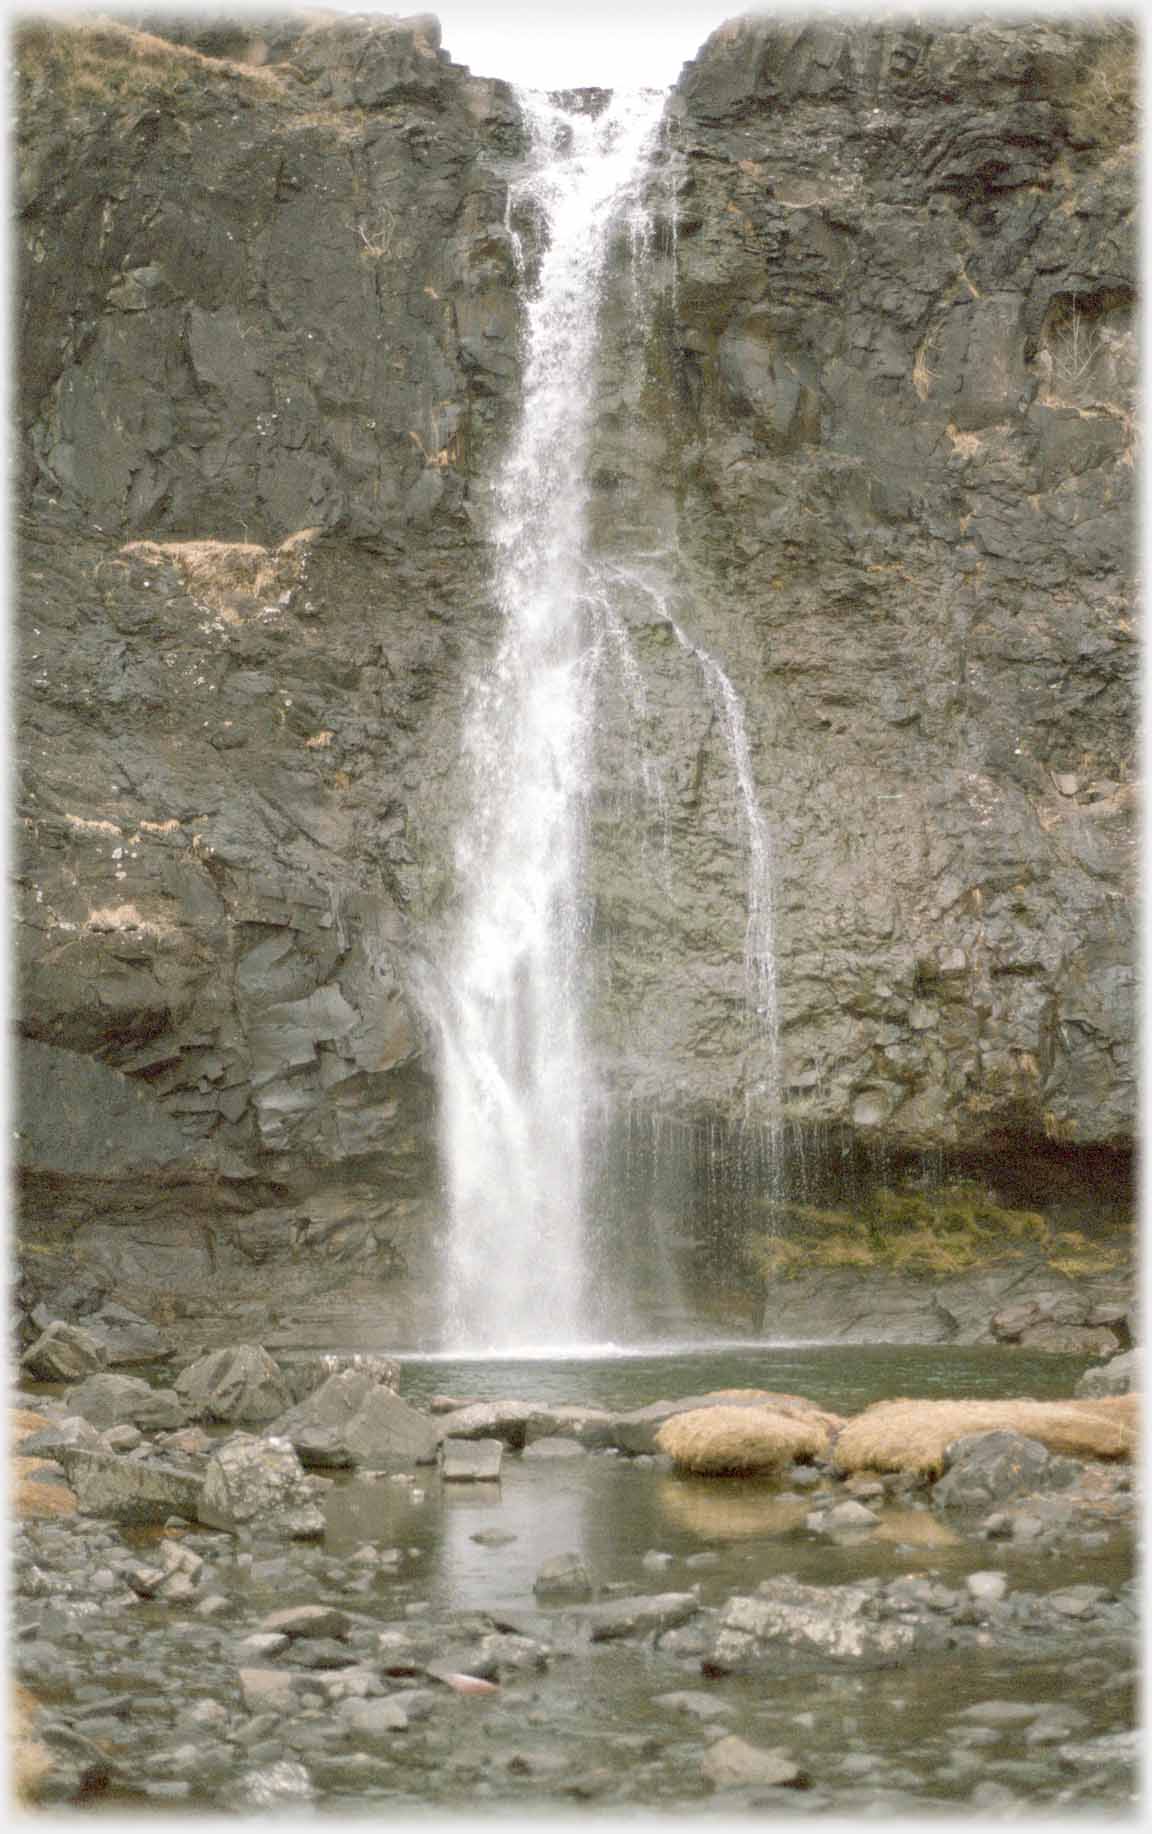 Waterfall into pool.